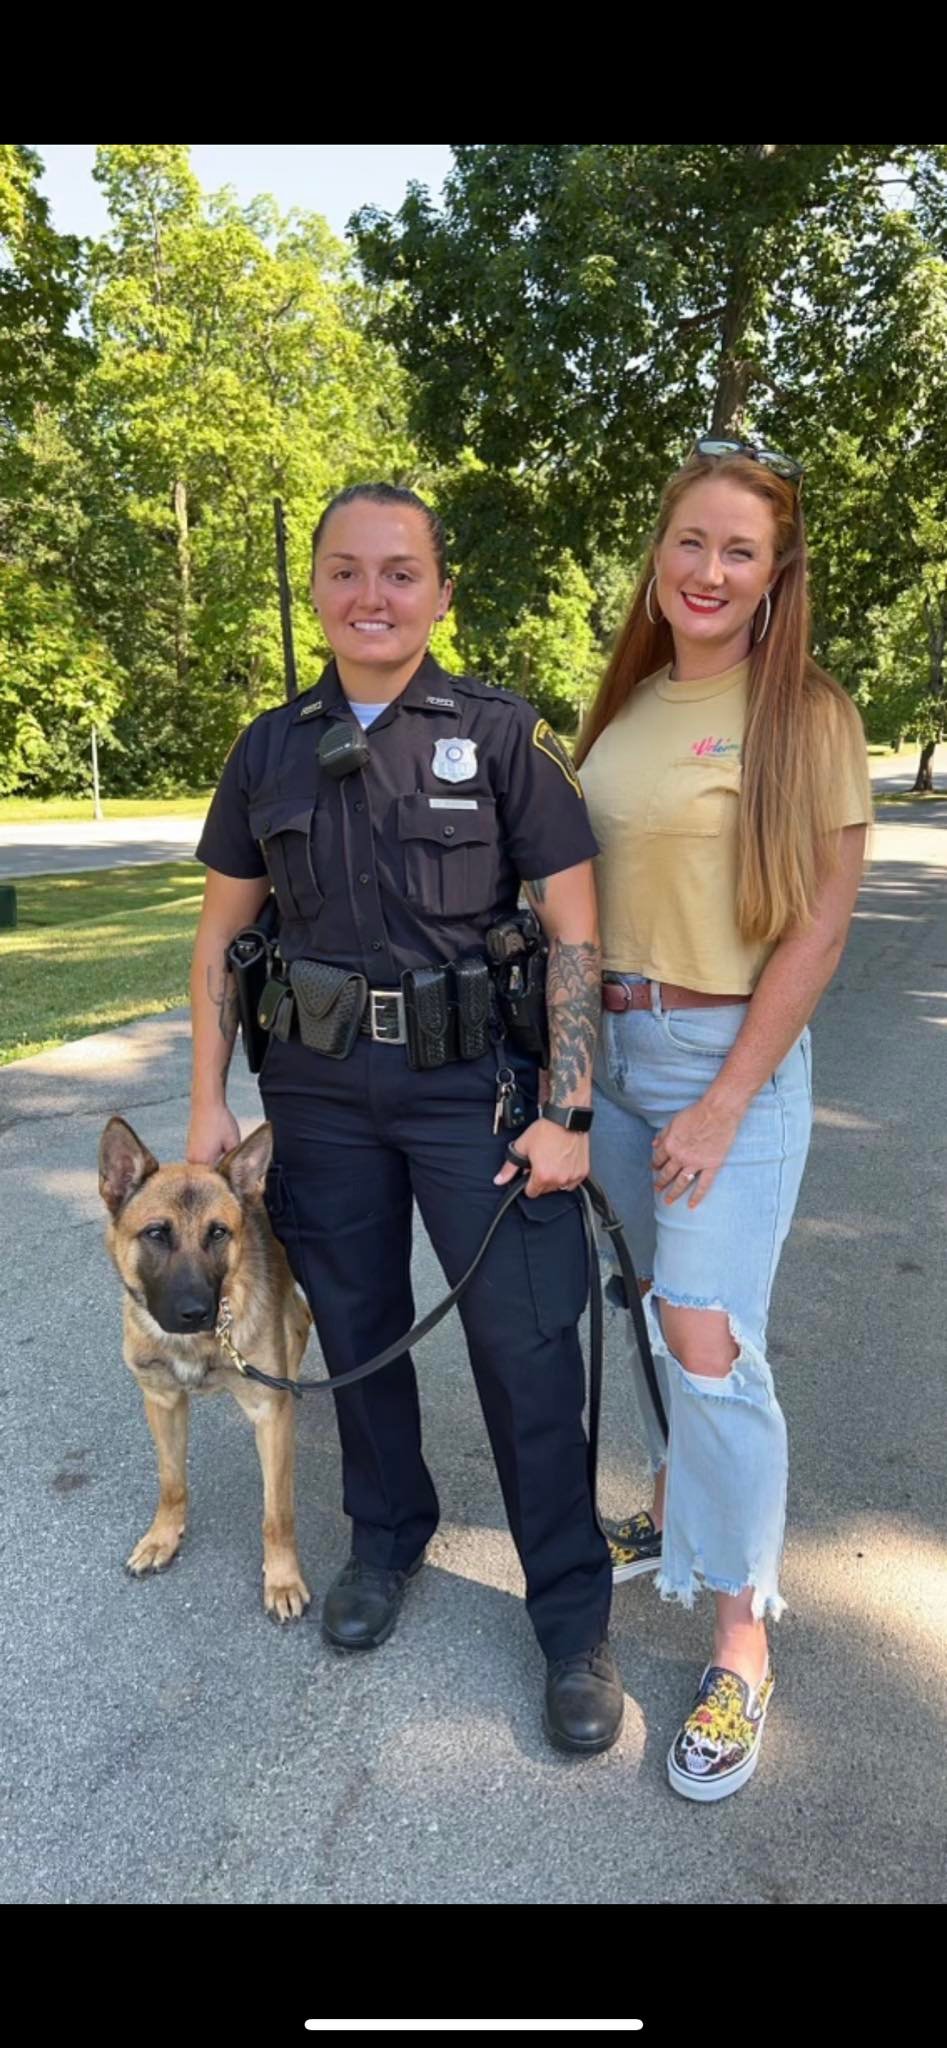 Police Officer Seara Burton | Richmond Police Department, Indiana